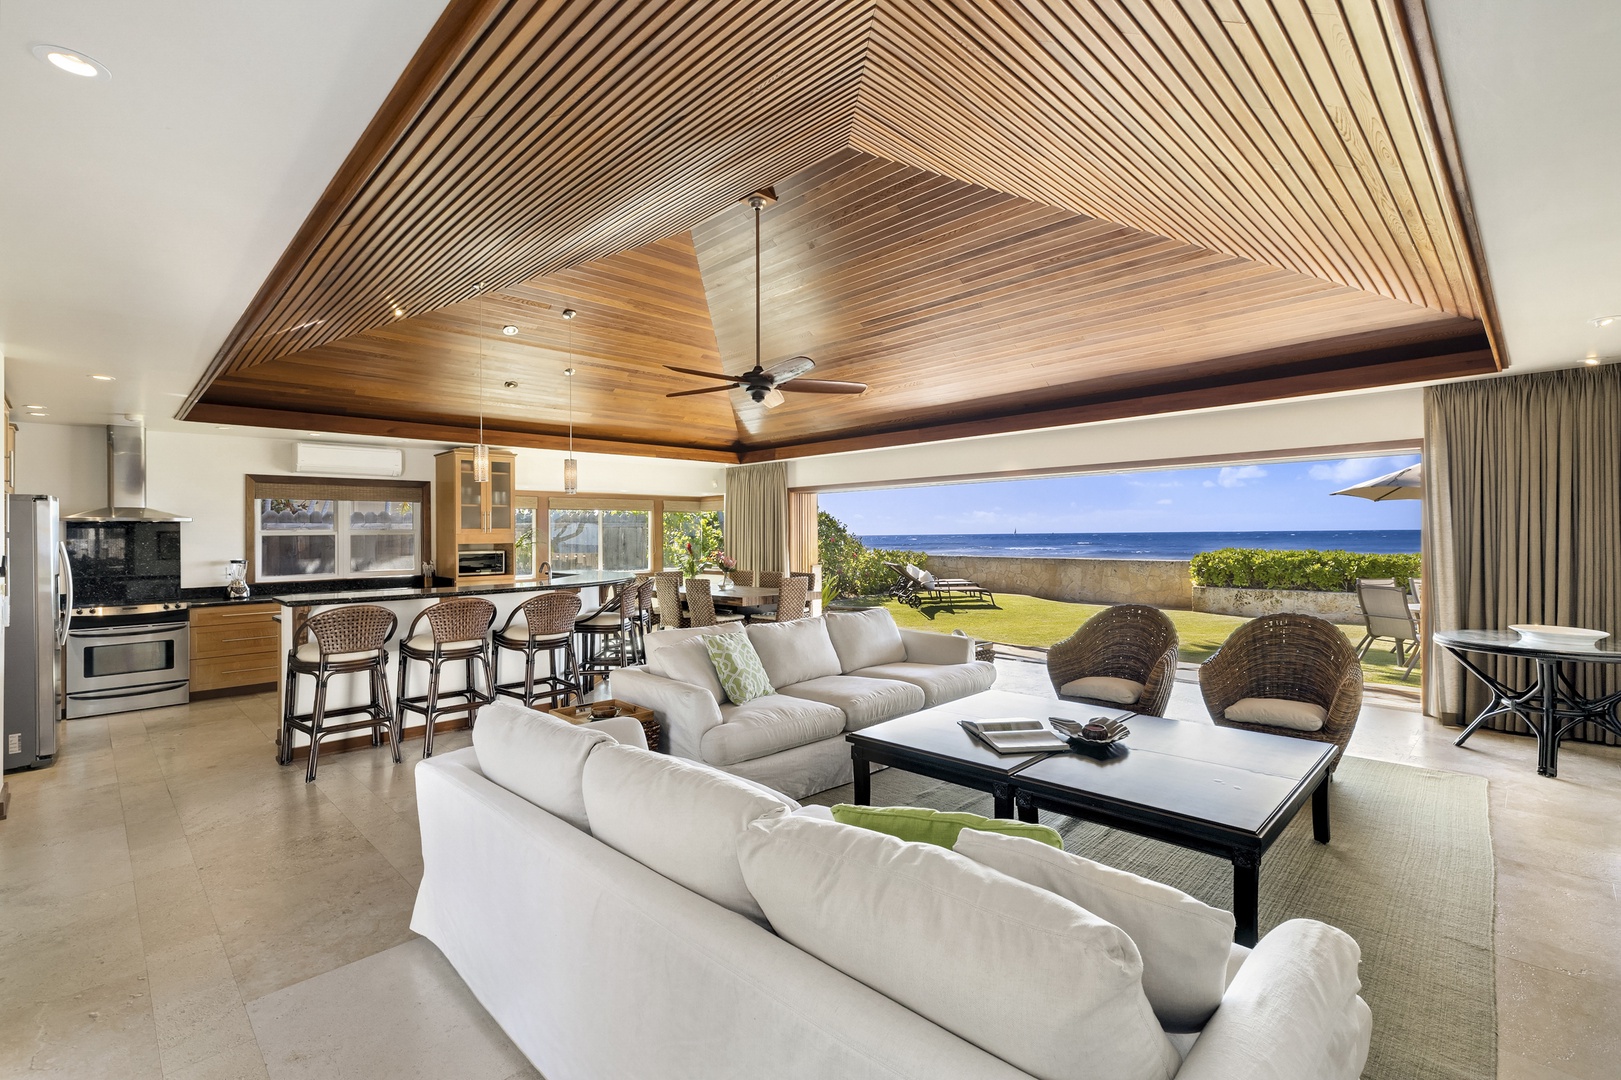 Honolulu Vacation Rentals, Hale Makai at Diamond Head - Living Room with Vaulted Ceiling.